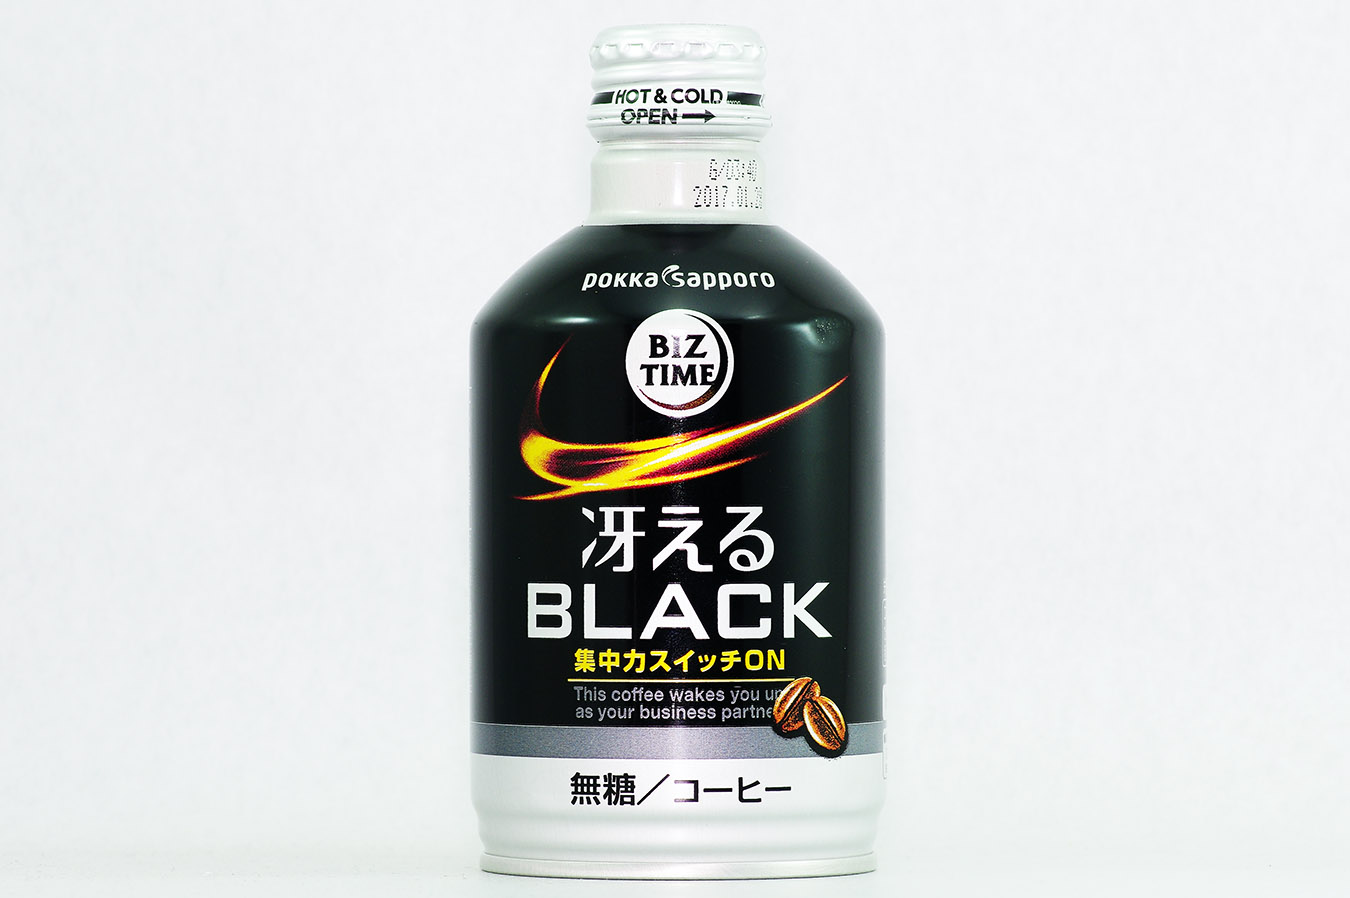 BIZ TIME 冴えるブラック 275mlボトル缶 2016年3月